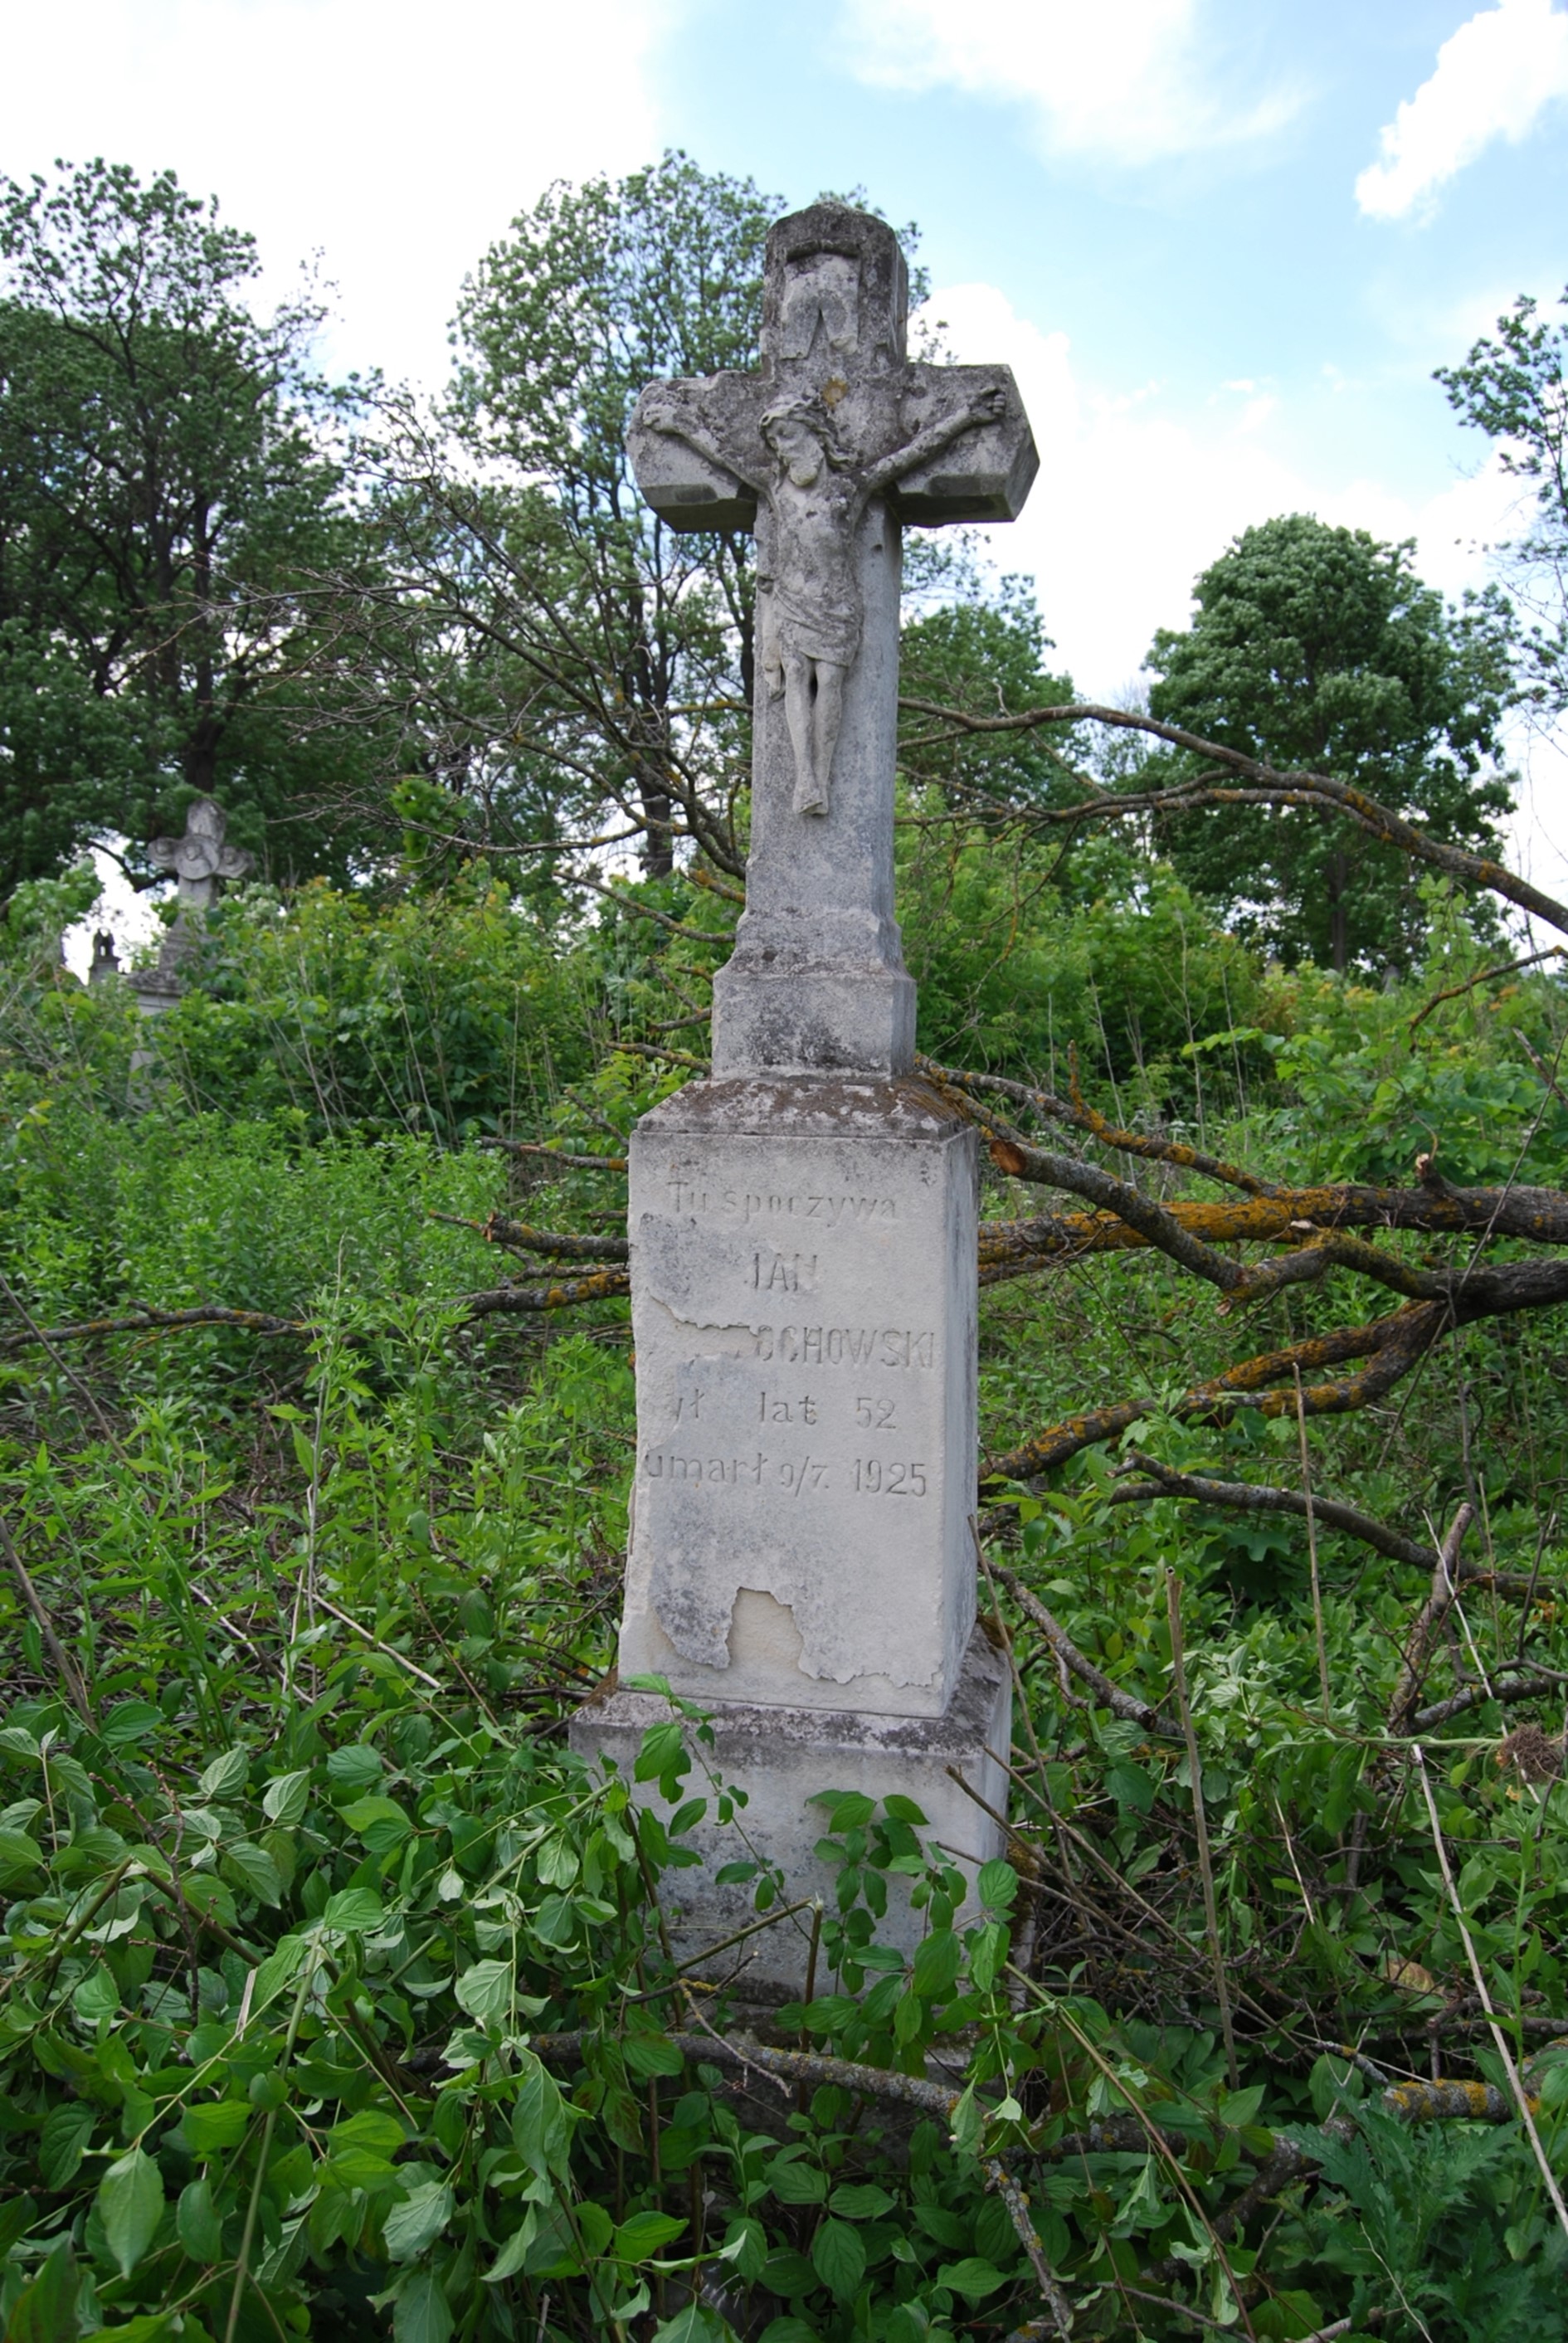 Tombstone of Jan Ochowski, Zbarazh cemetery, as of 2018